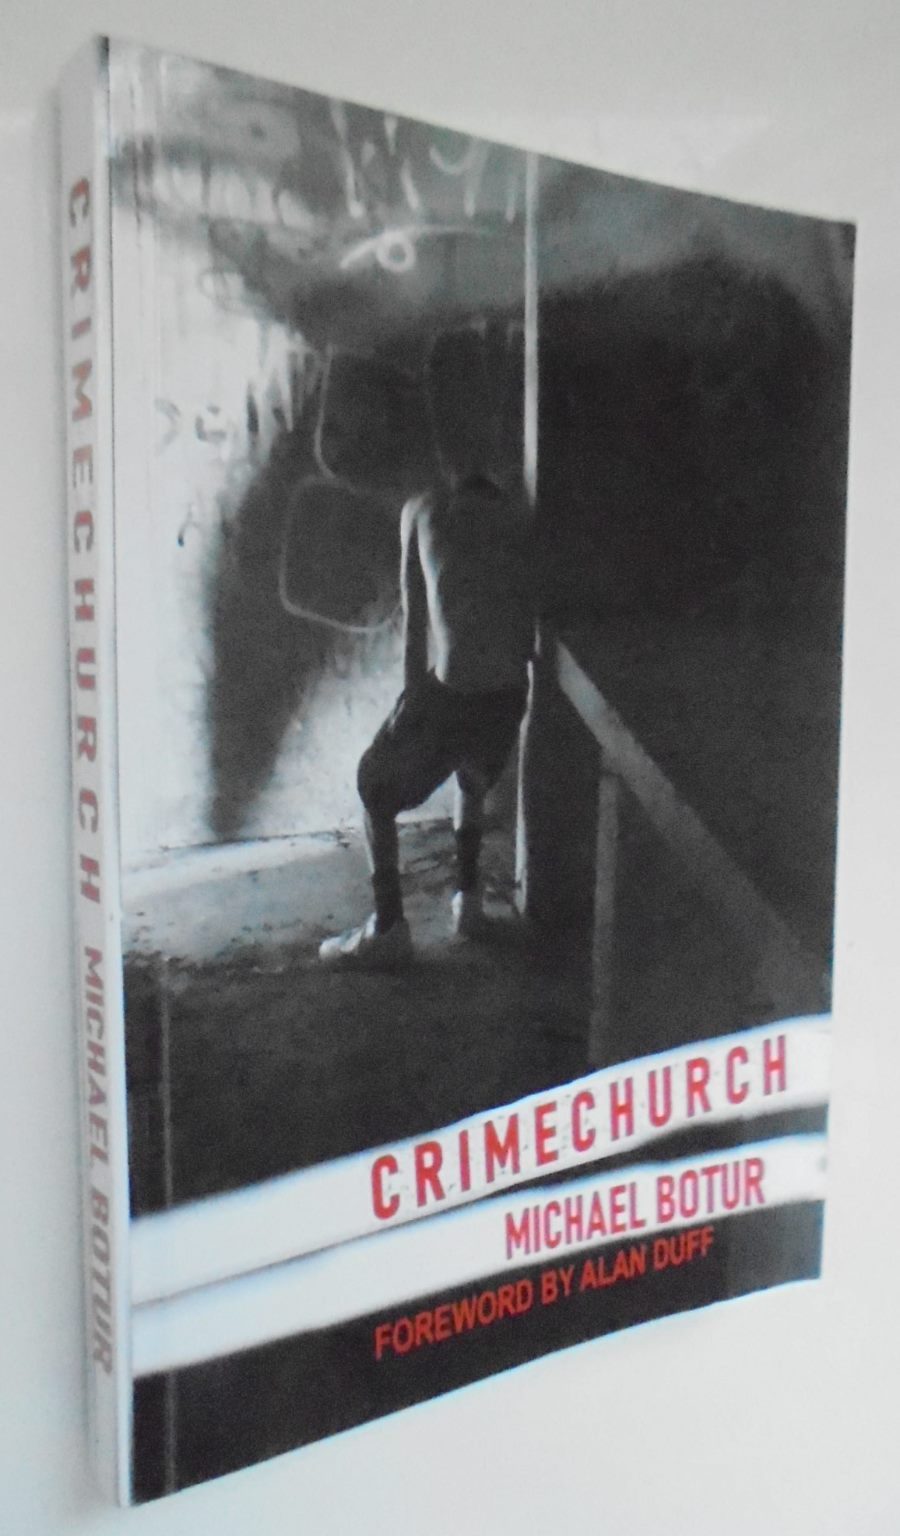 Crimechurch By Michael Botur. New Zealand Fiction